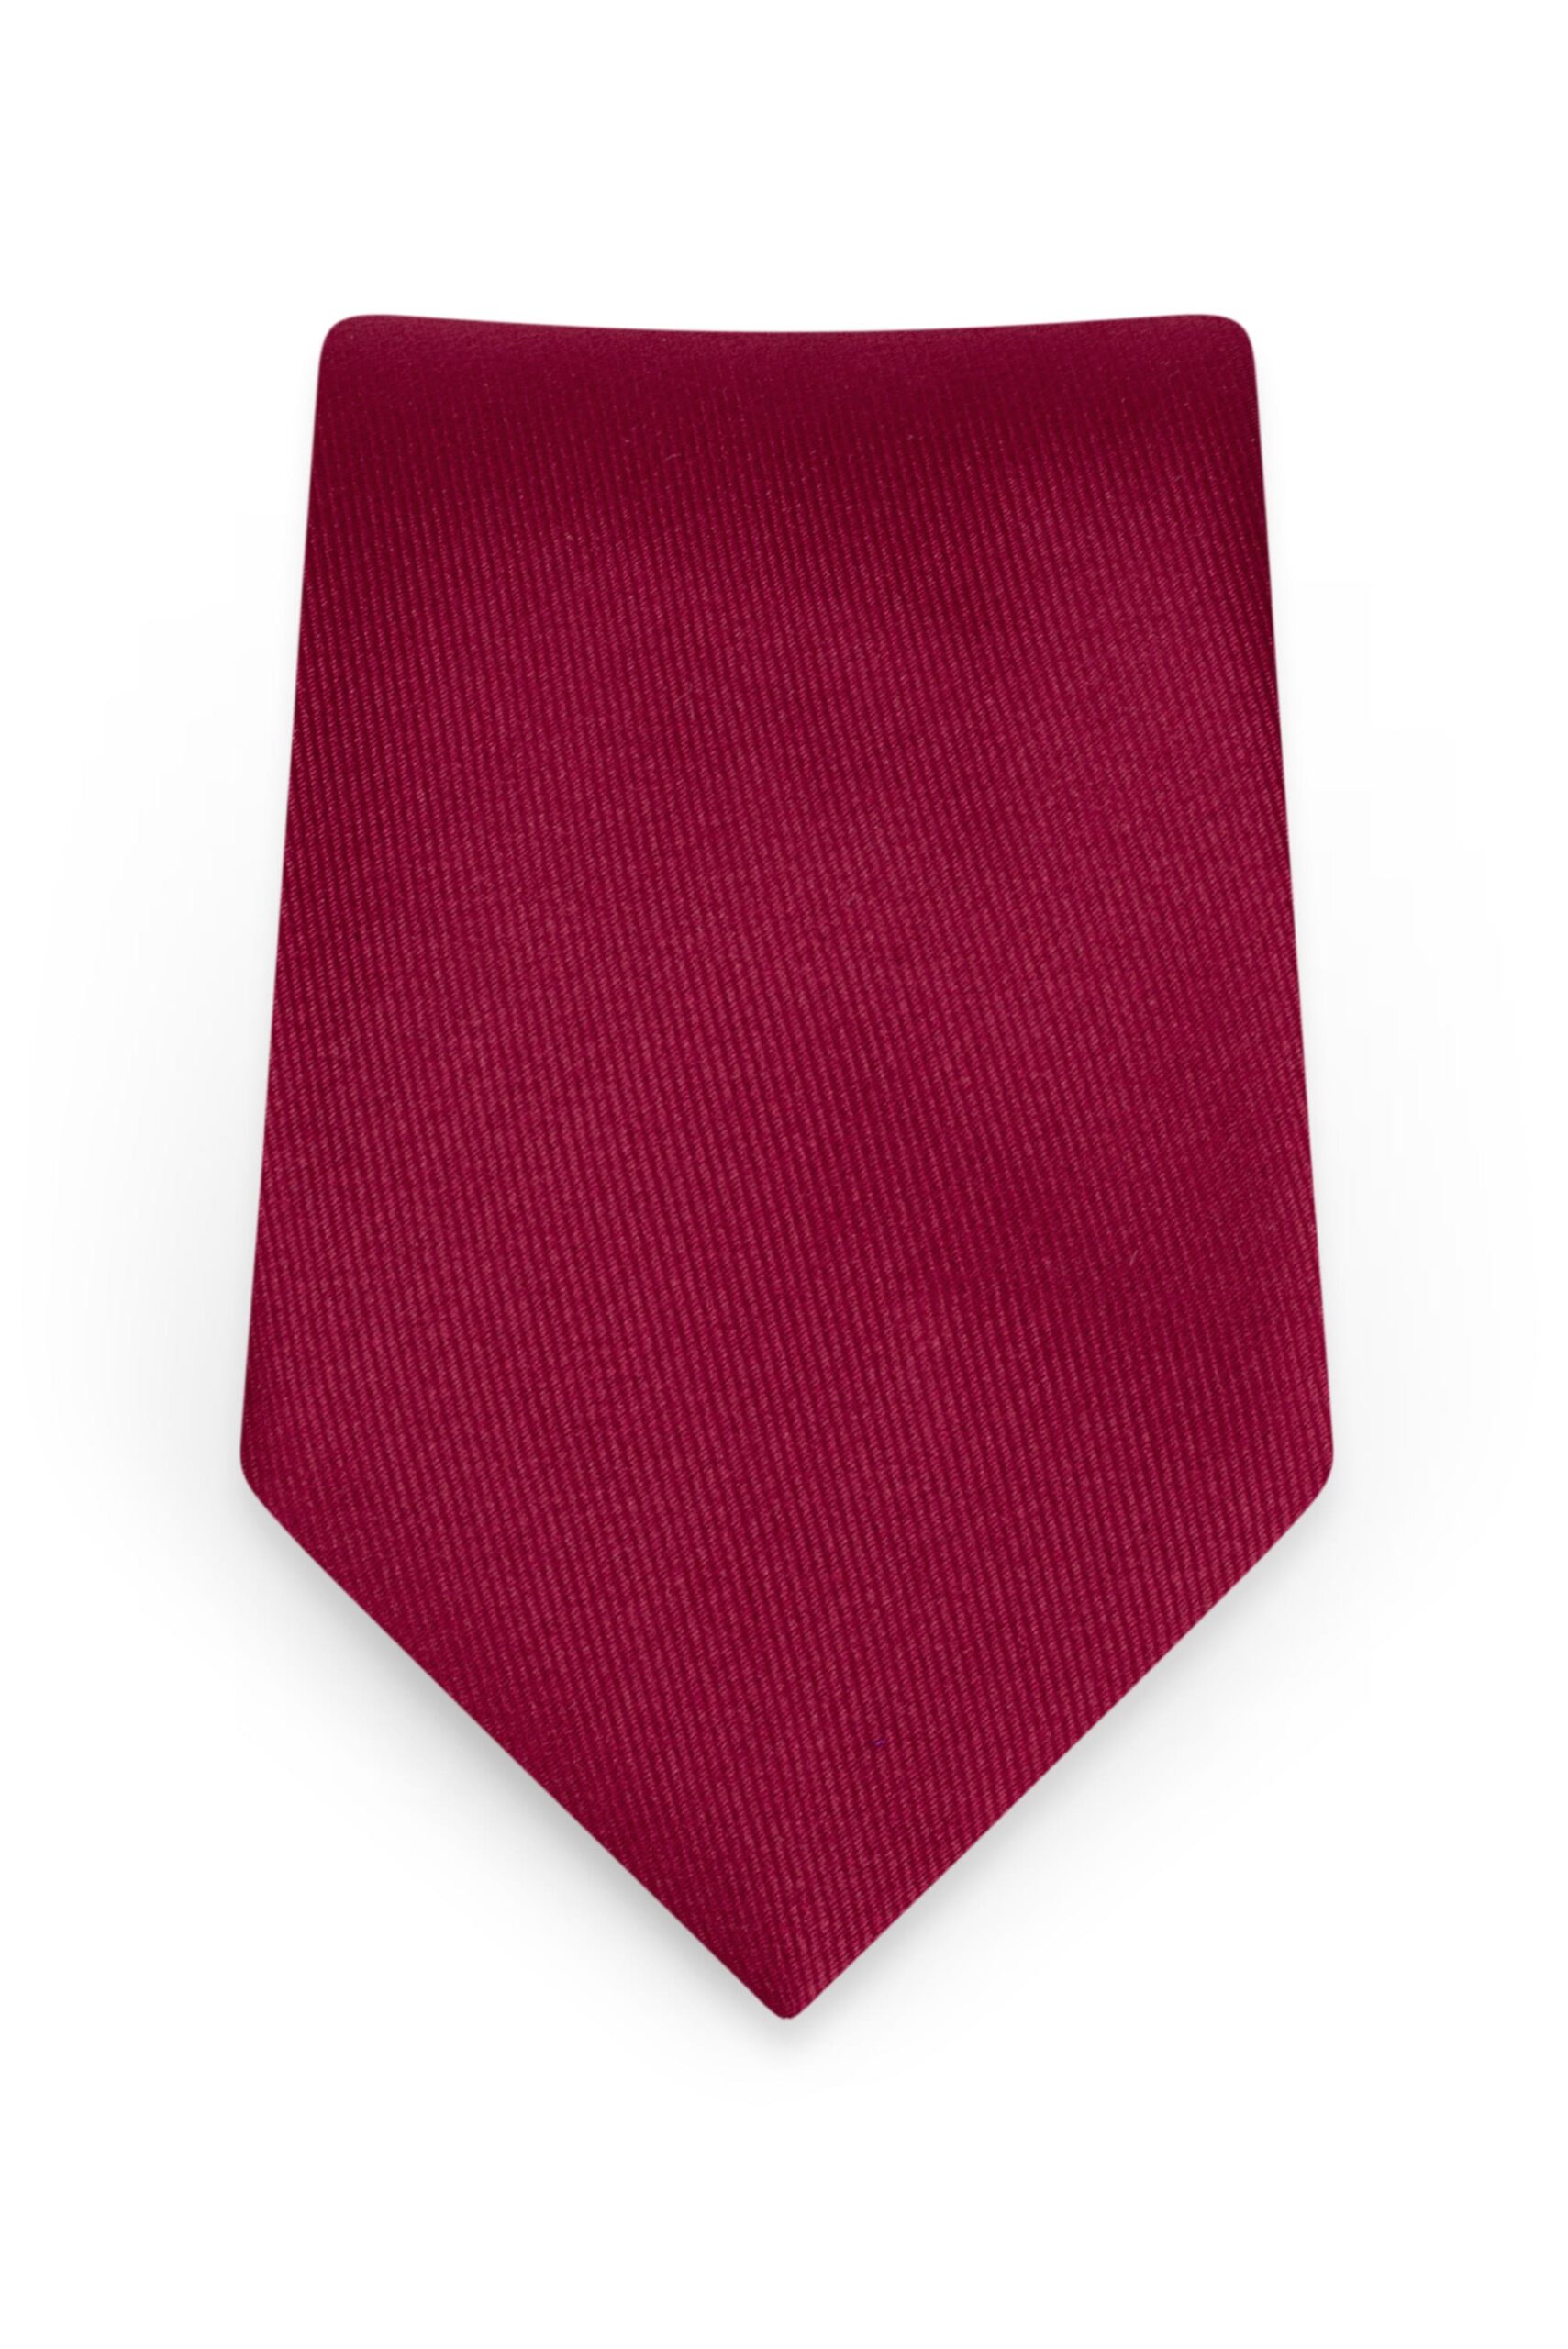 Solid Apple Red Self-Tie Windsor Tie